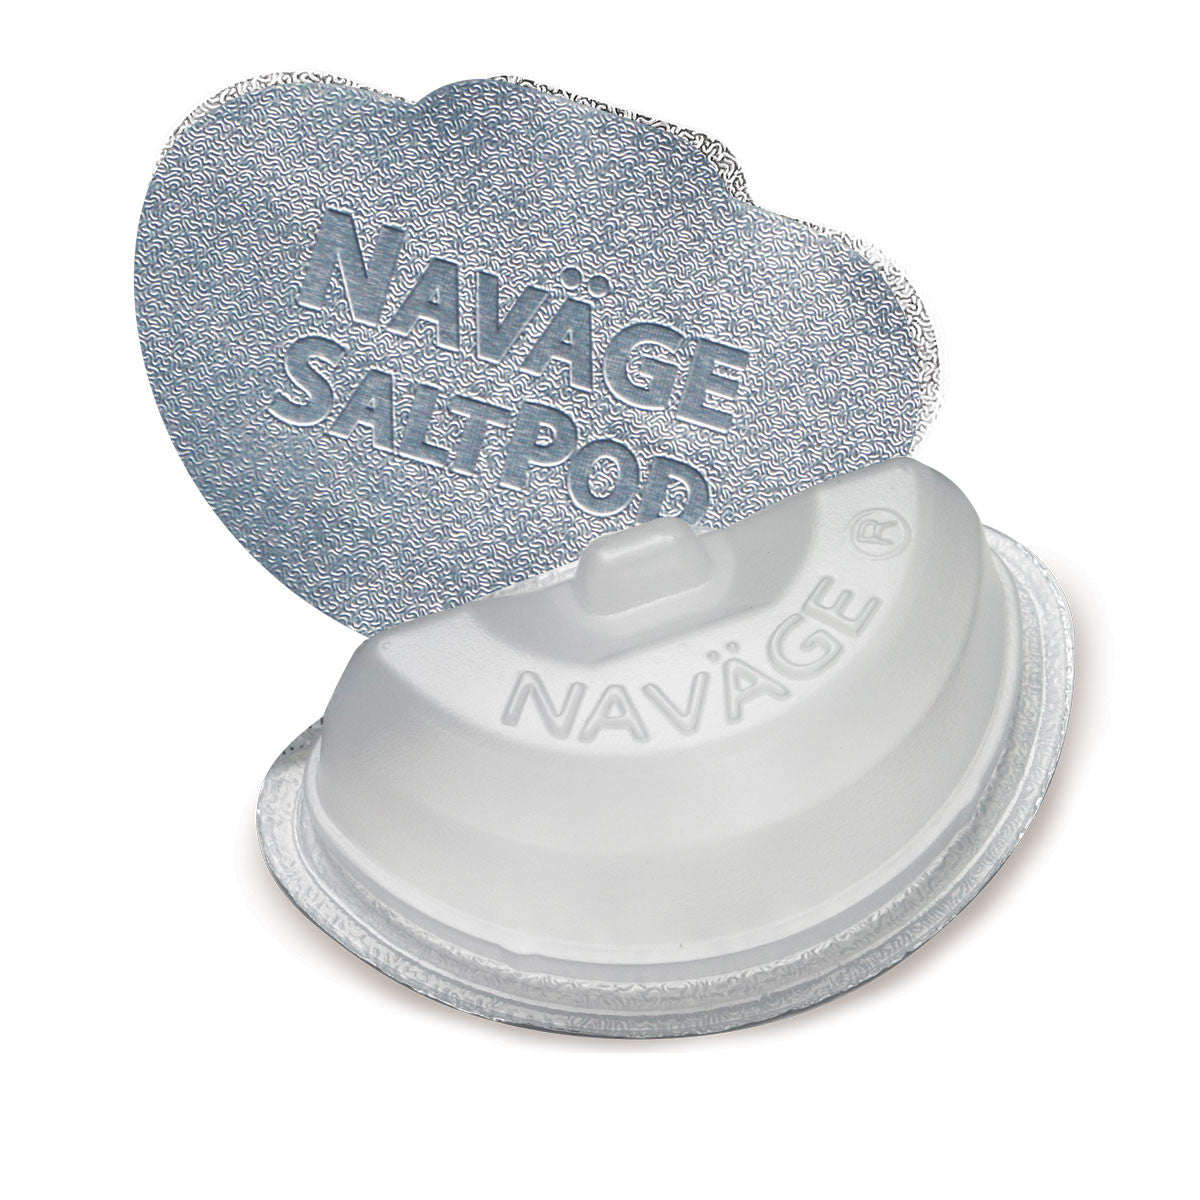 Paquete Navage Essentials: limpiador de nariz, 20 SaltPods, Countertop Caddy de tres niveles